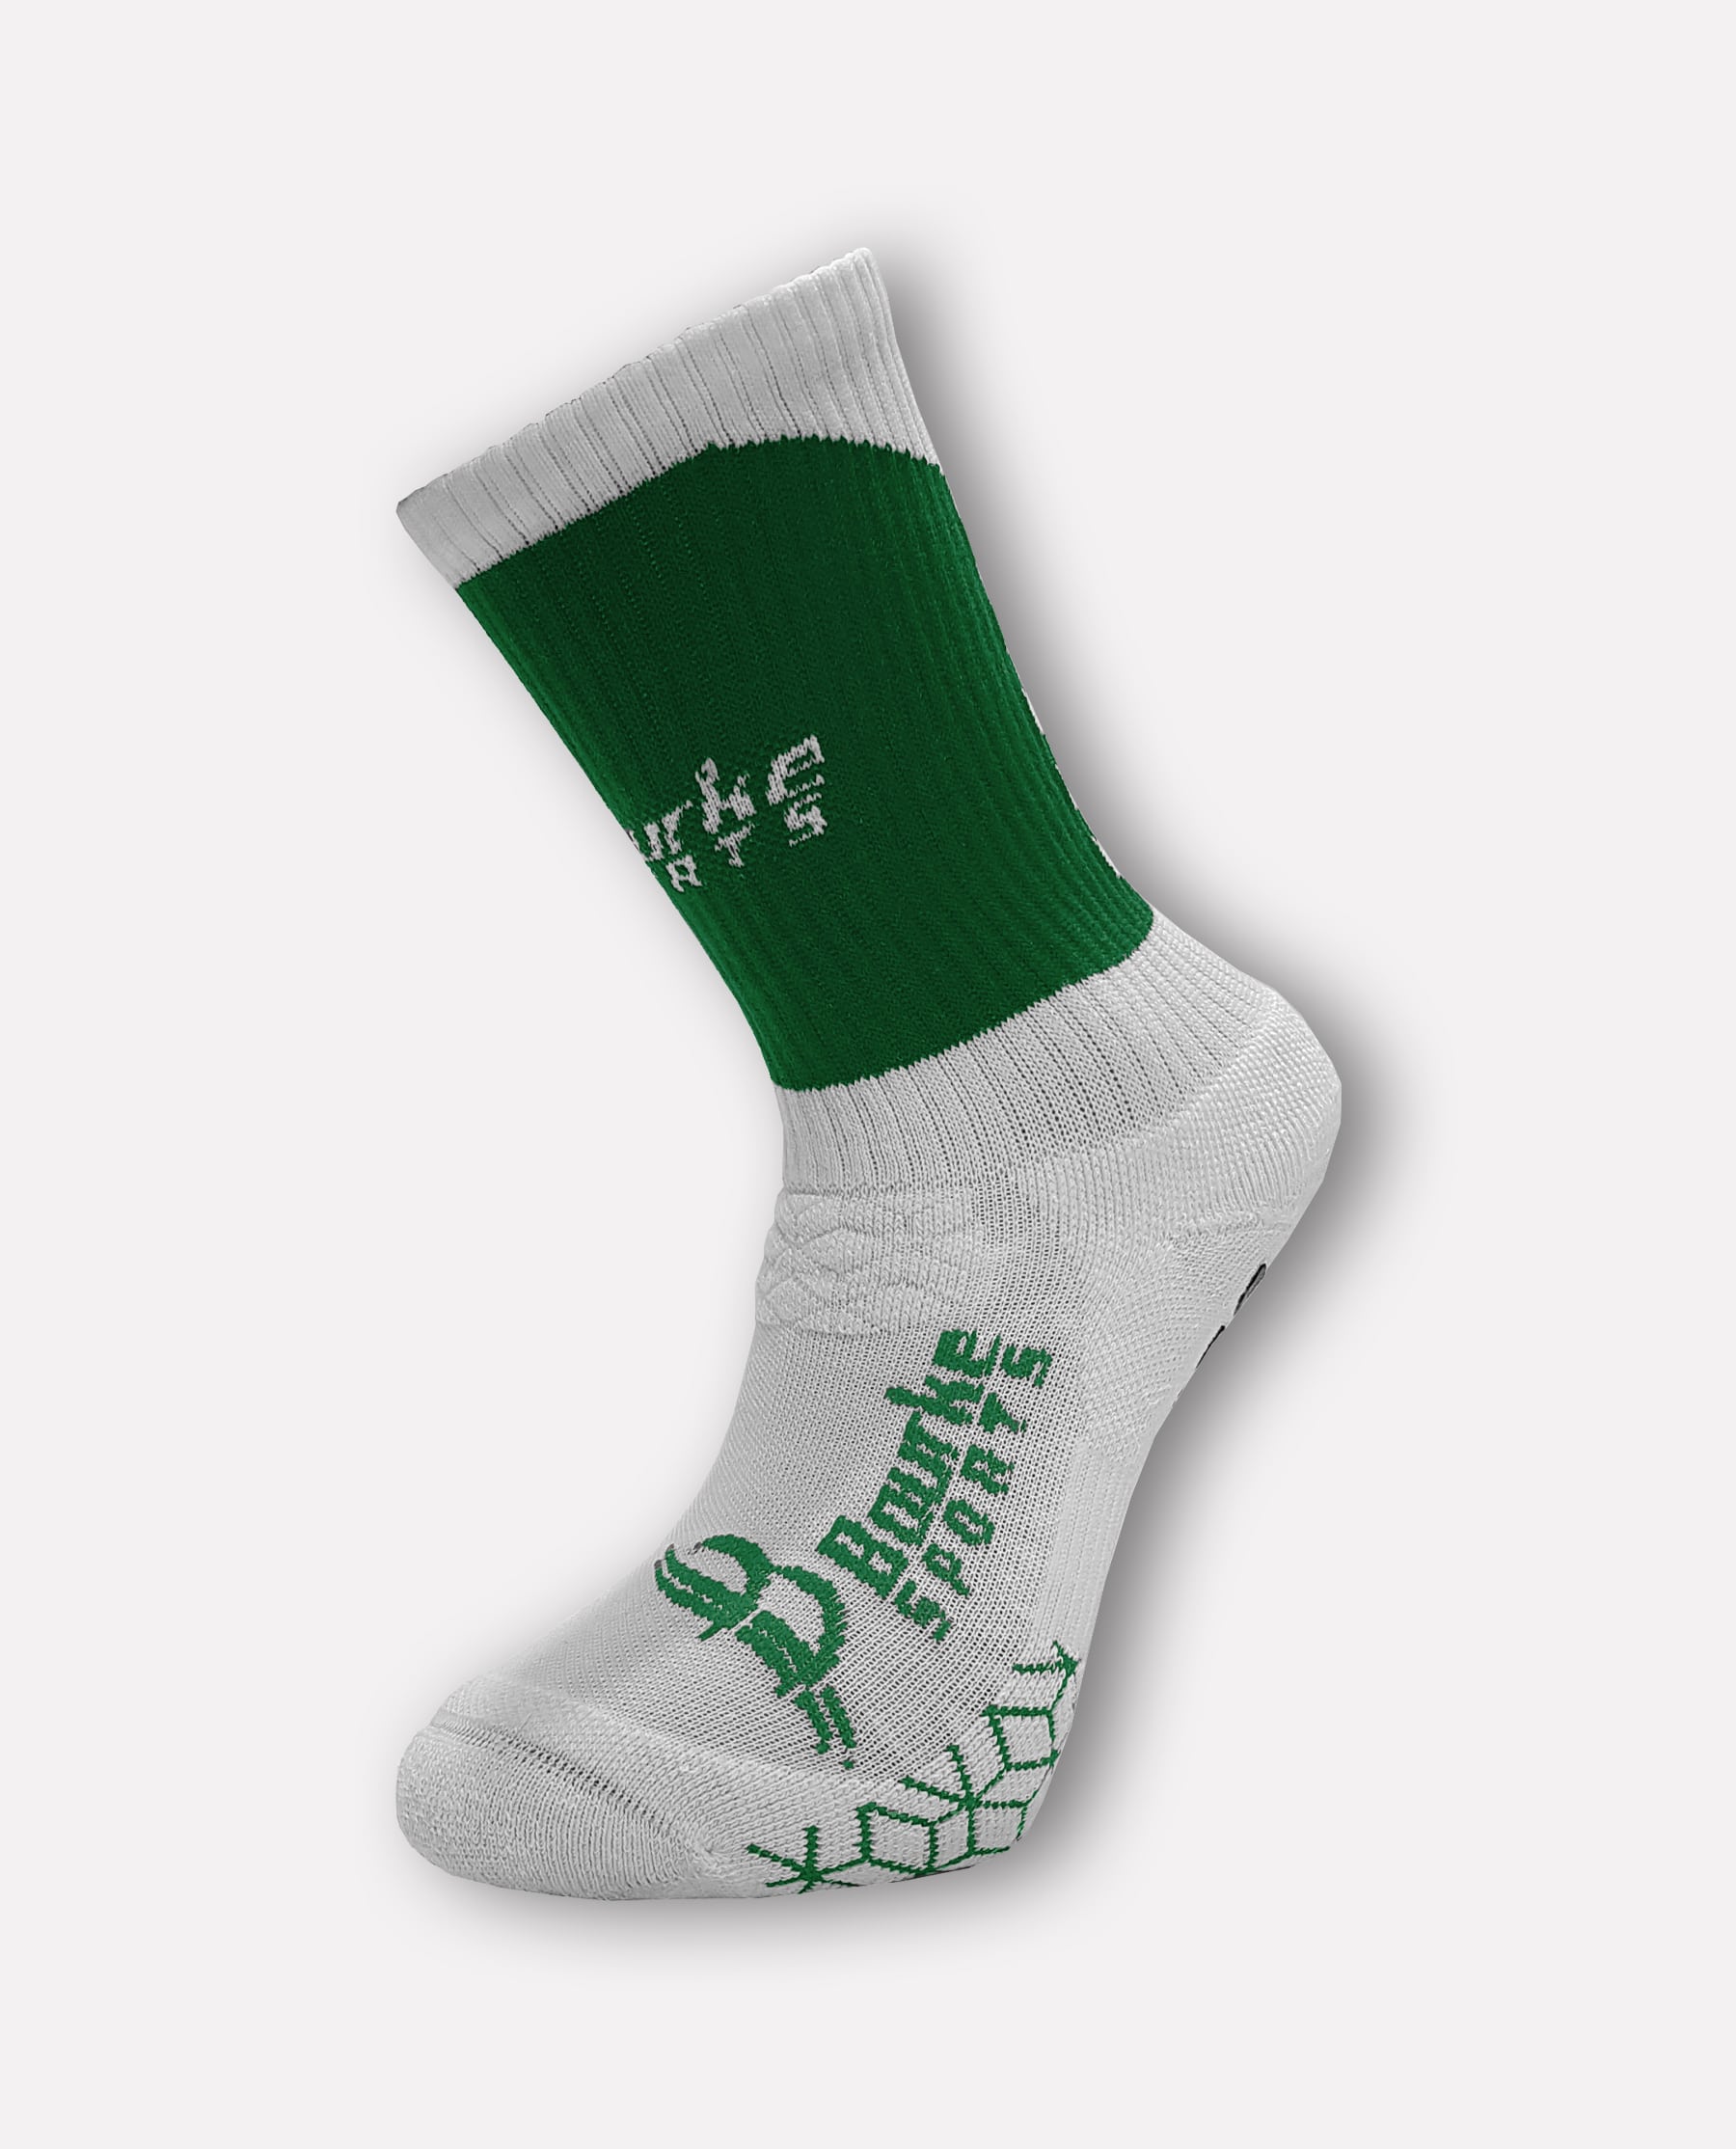 Holycross Ballycahill LGFA Miniz Socks